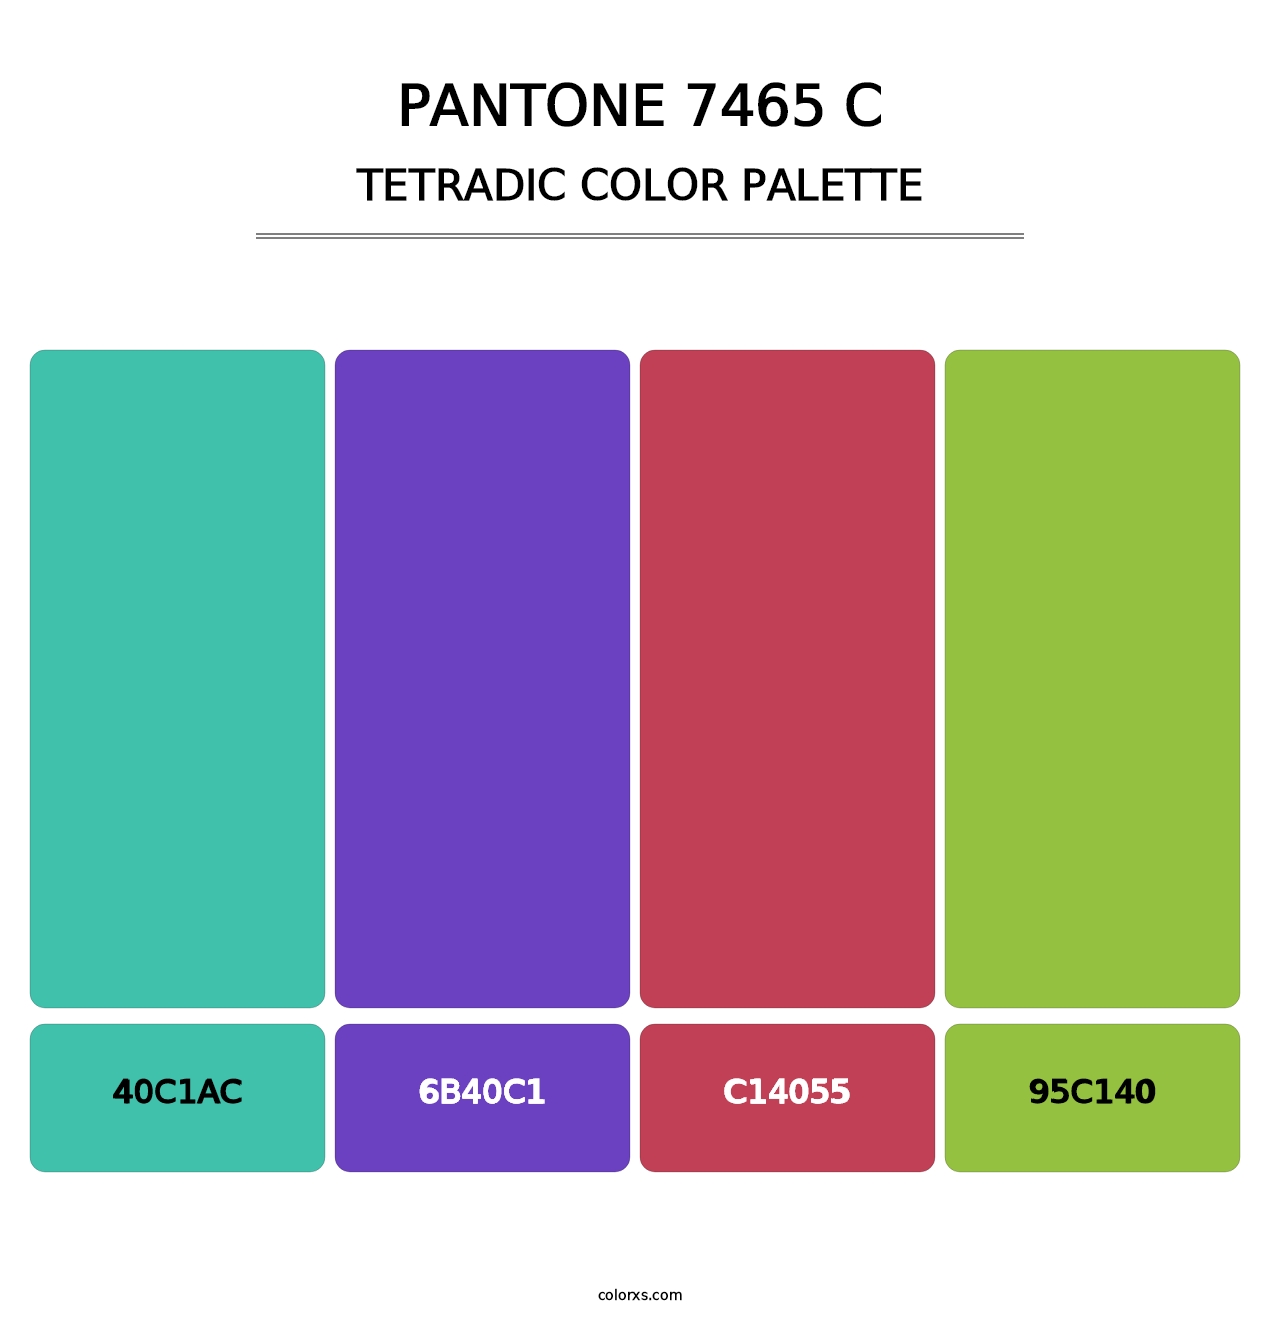 PANTONE 7465 C - Tetradic Color Palette